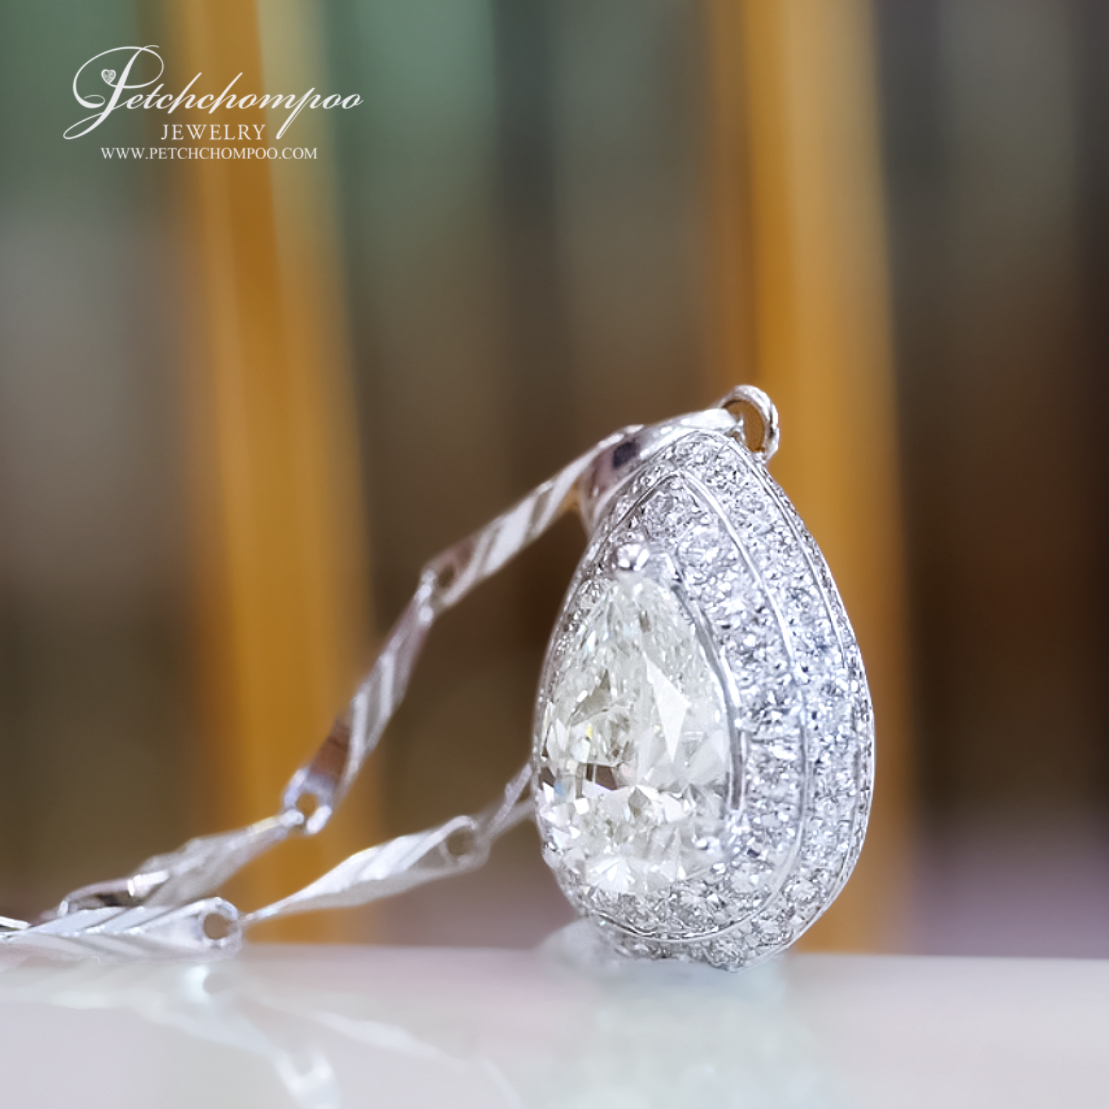 [27077] Necklace with 1 carat diamond pendant Discount 129,000